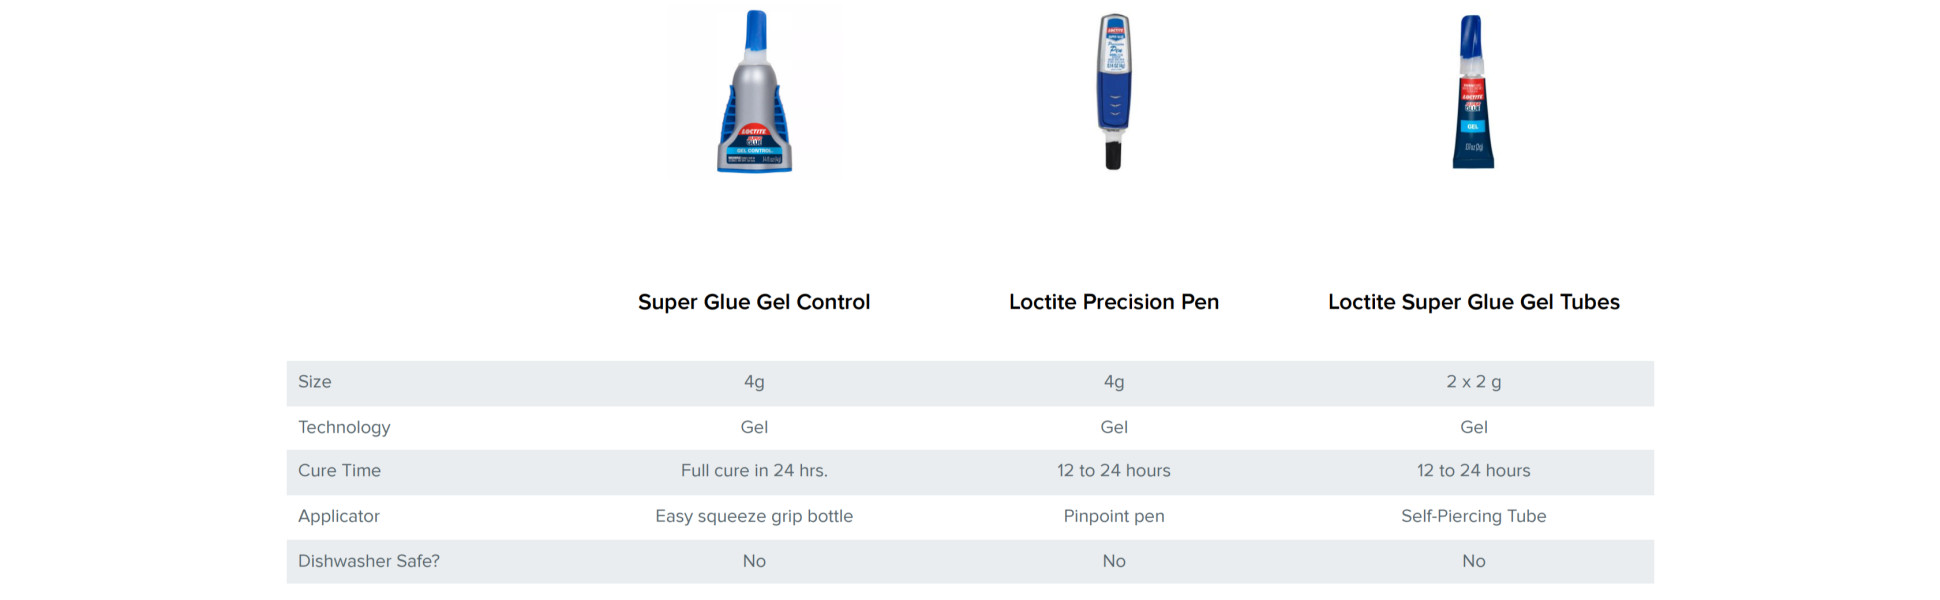 Loctite Super Glue Gel Control, Pack of 1, Clear 4 g Bottle